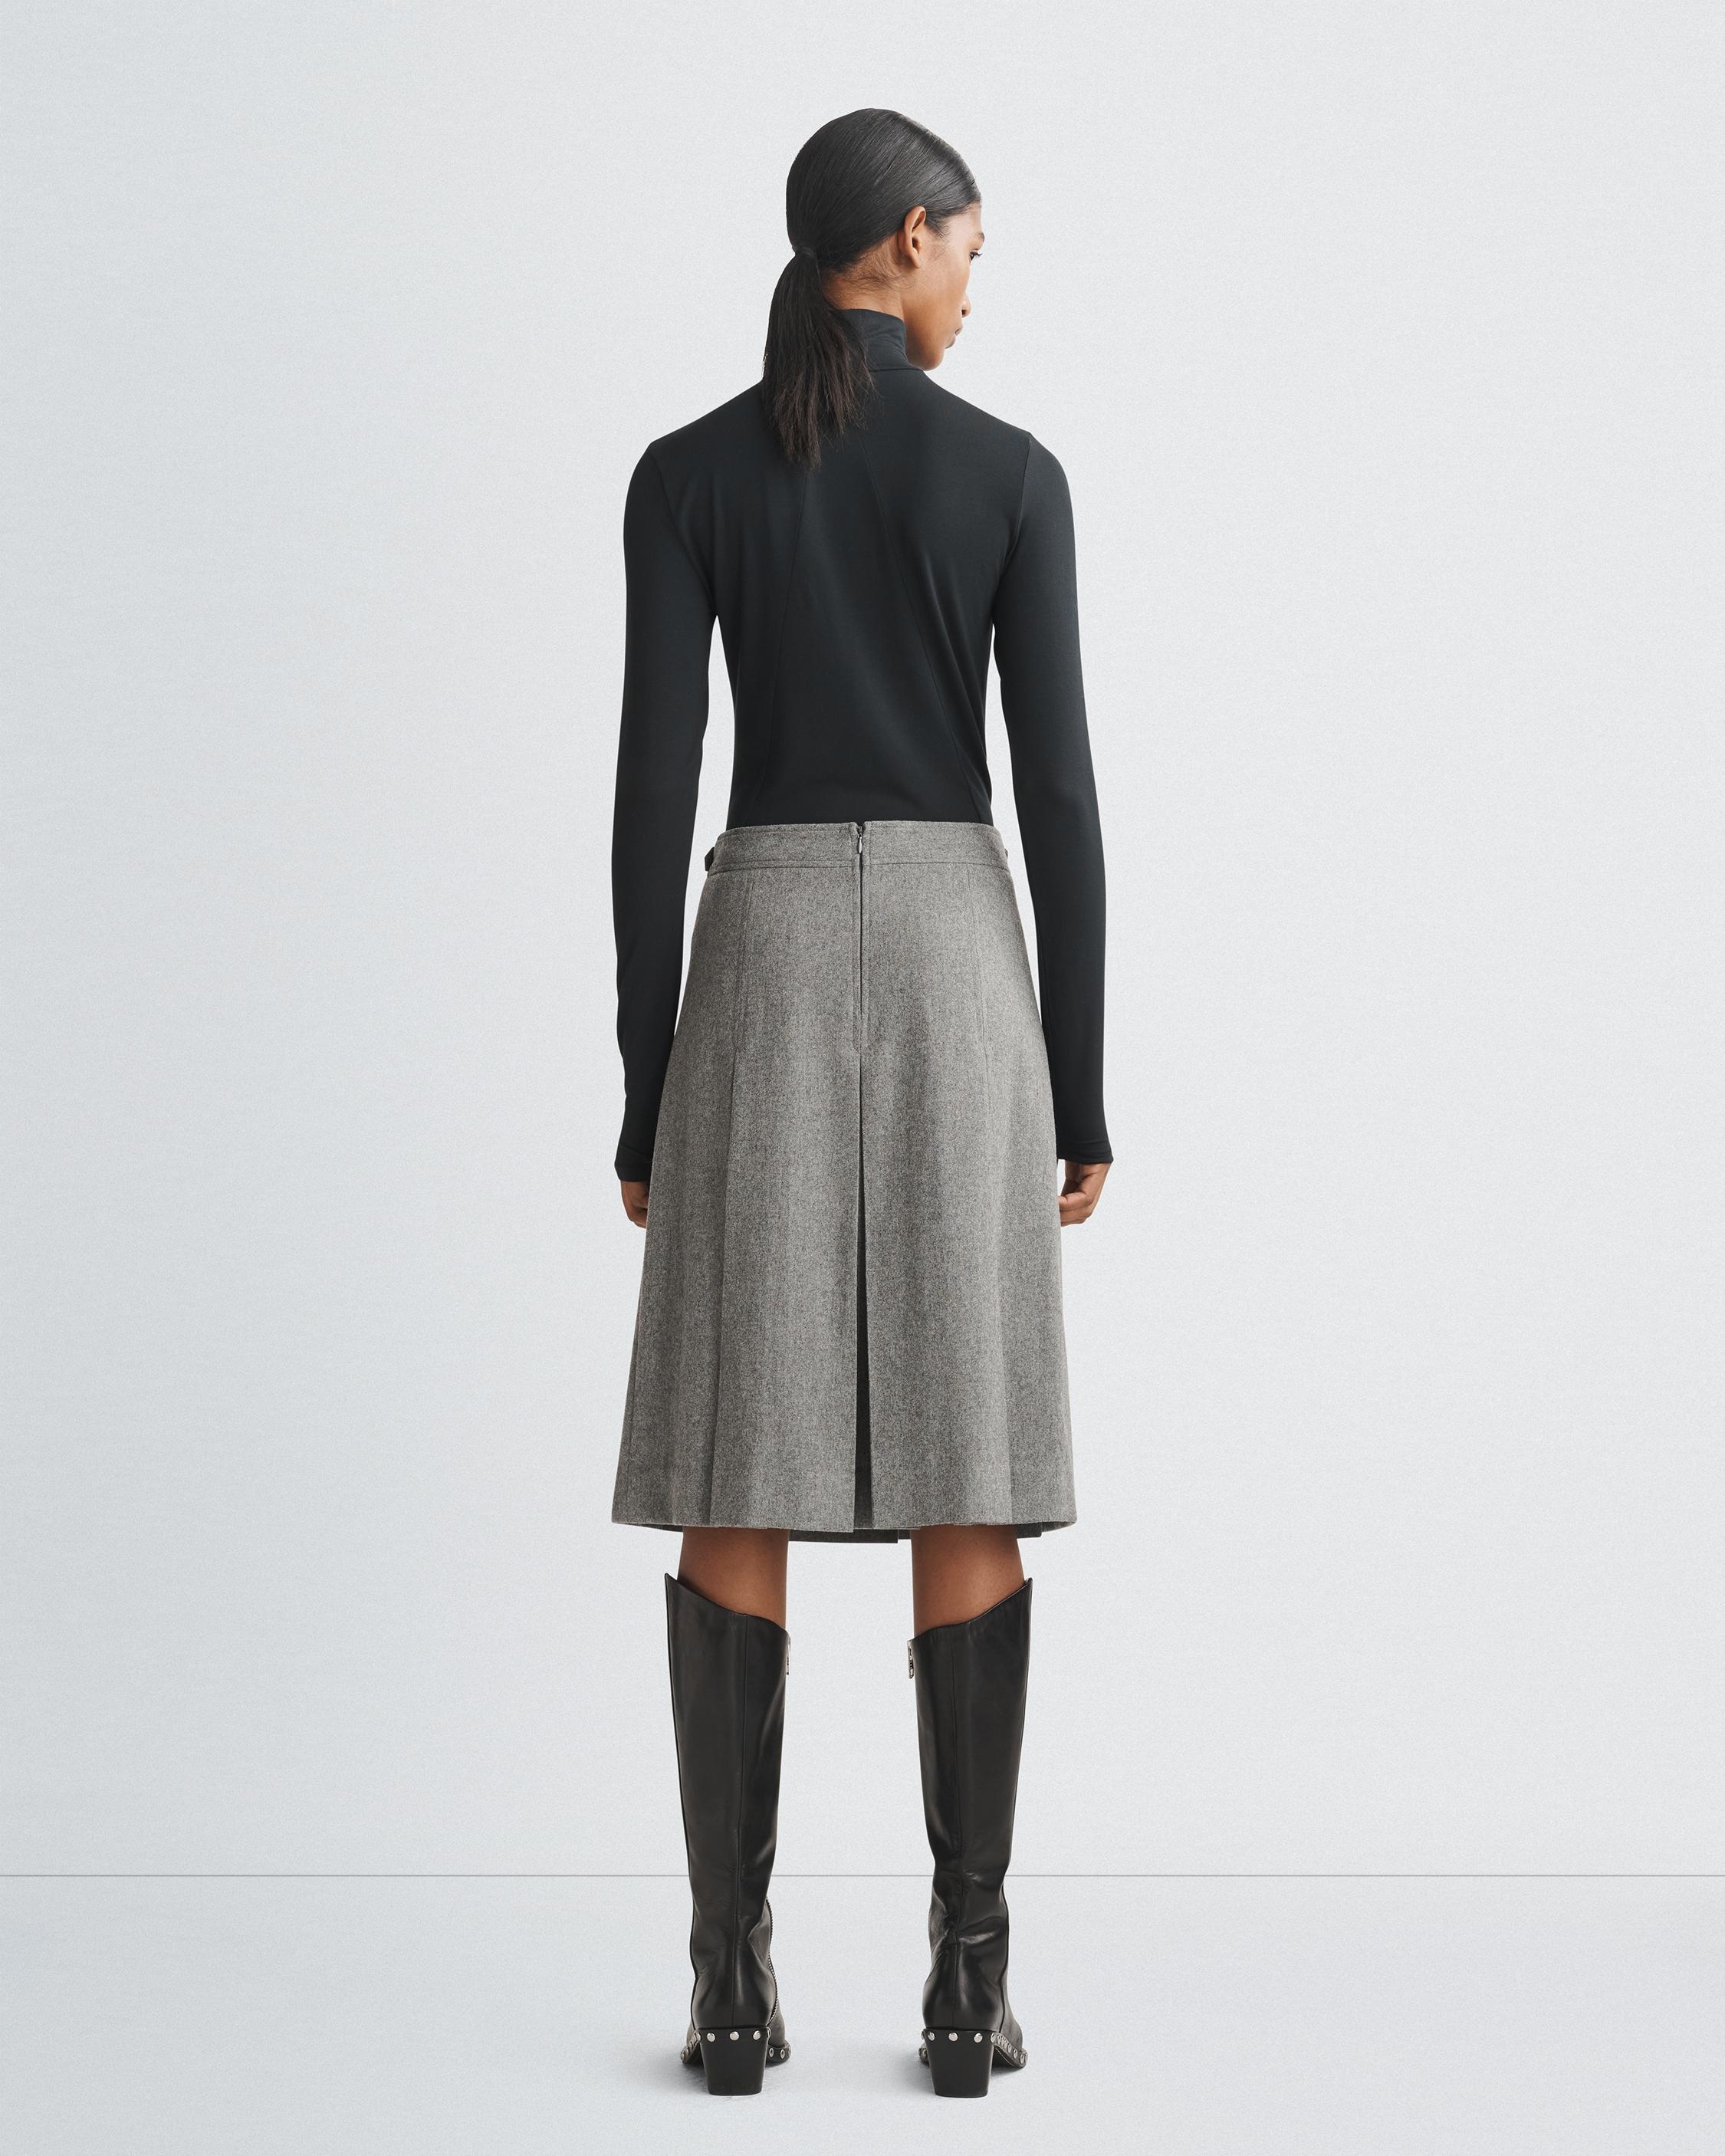 Garnet Italian Wool Skirt
Midi - 4